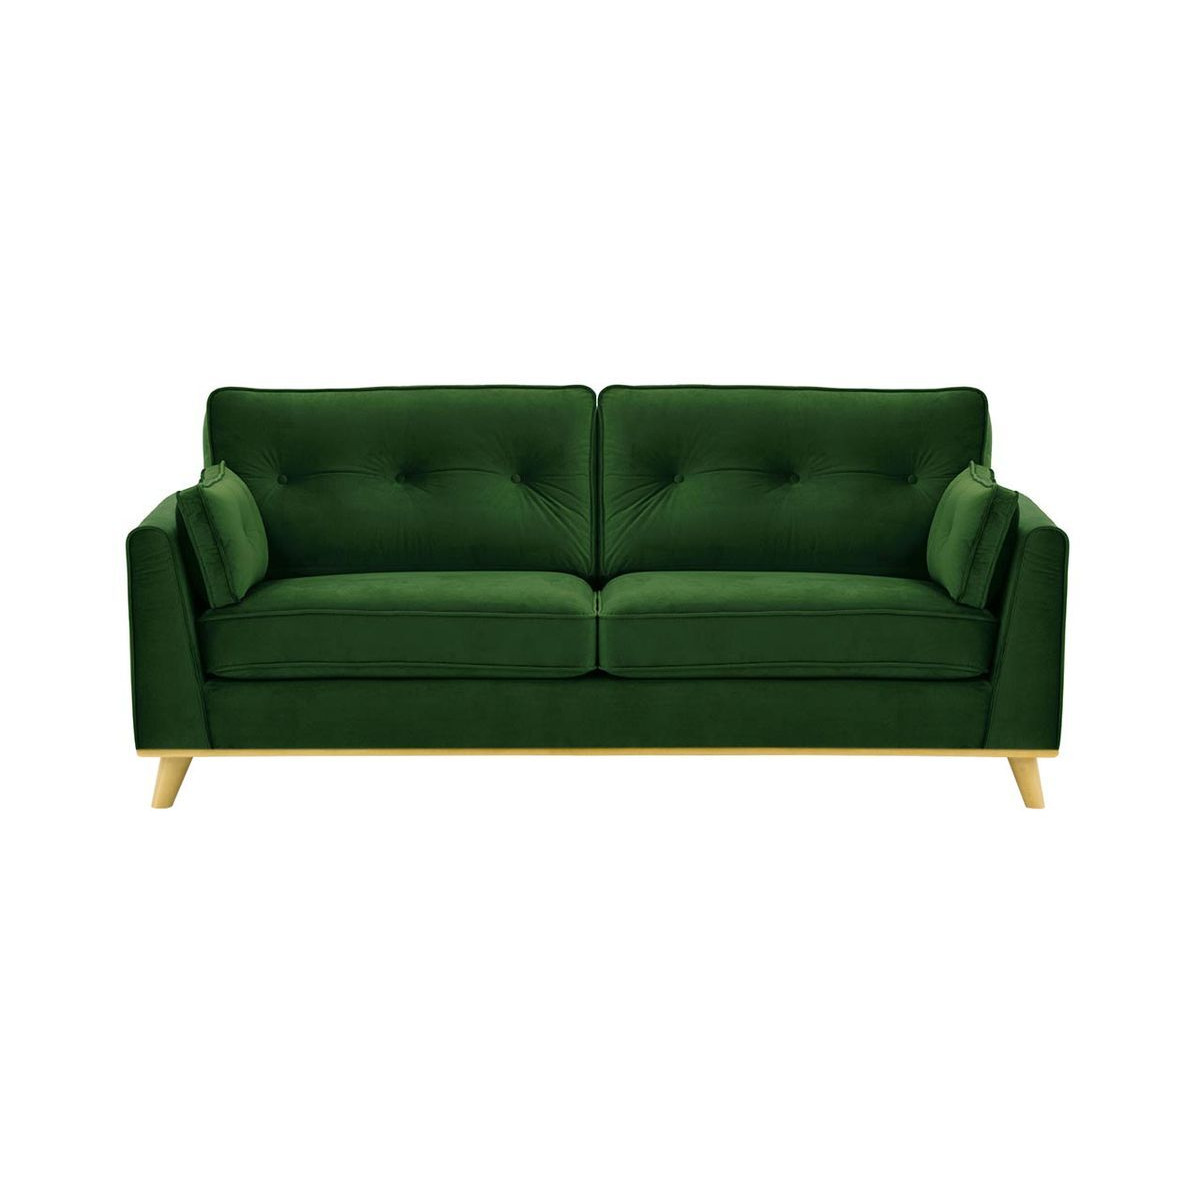 Farrow 3 Seater Sofa, turquoise, Leg colour: aveo - image 1